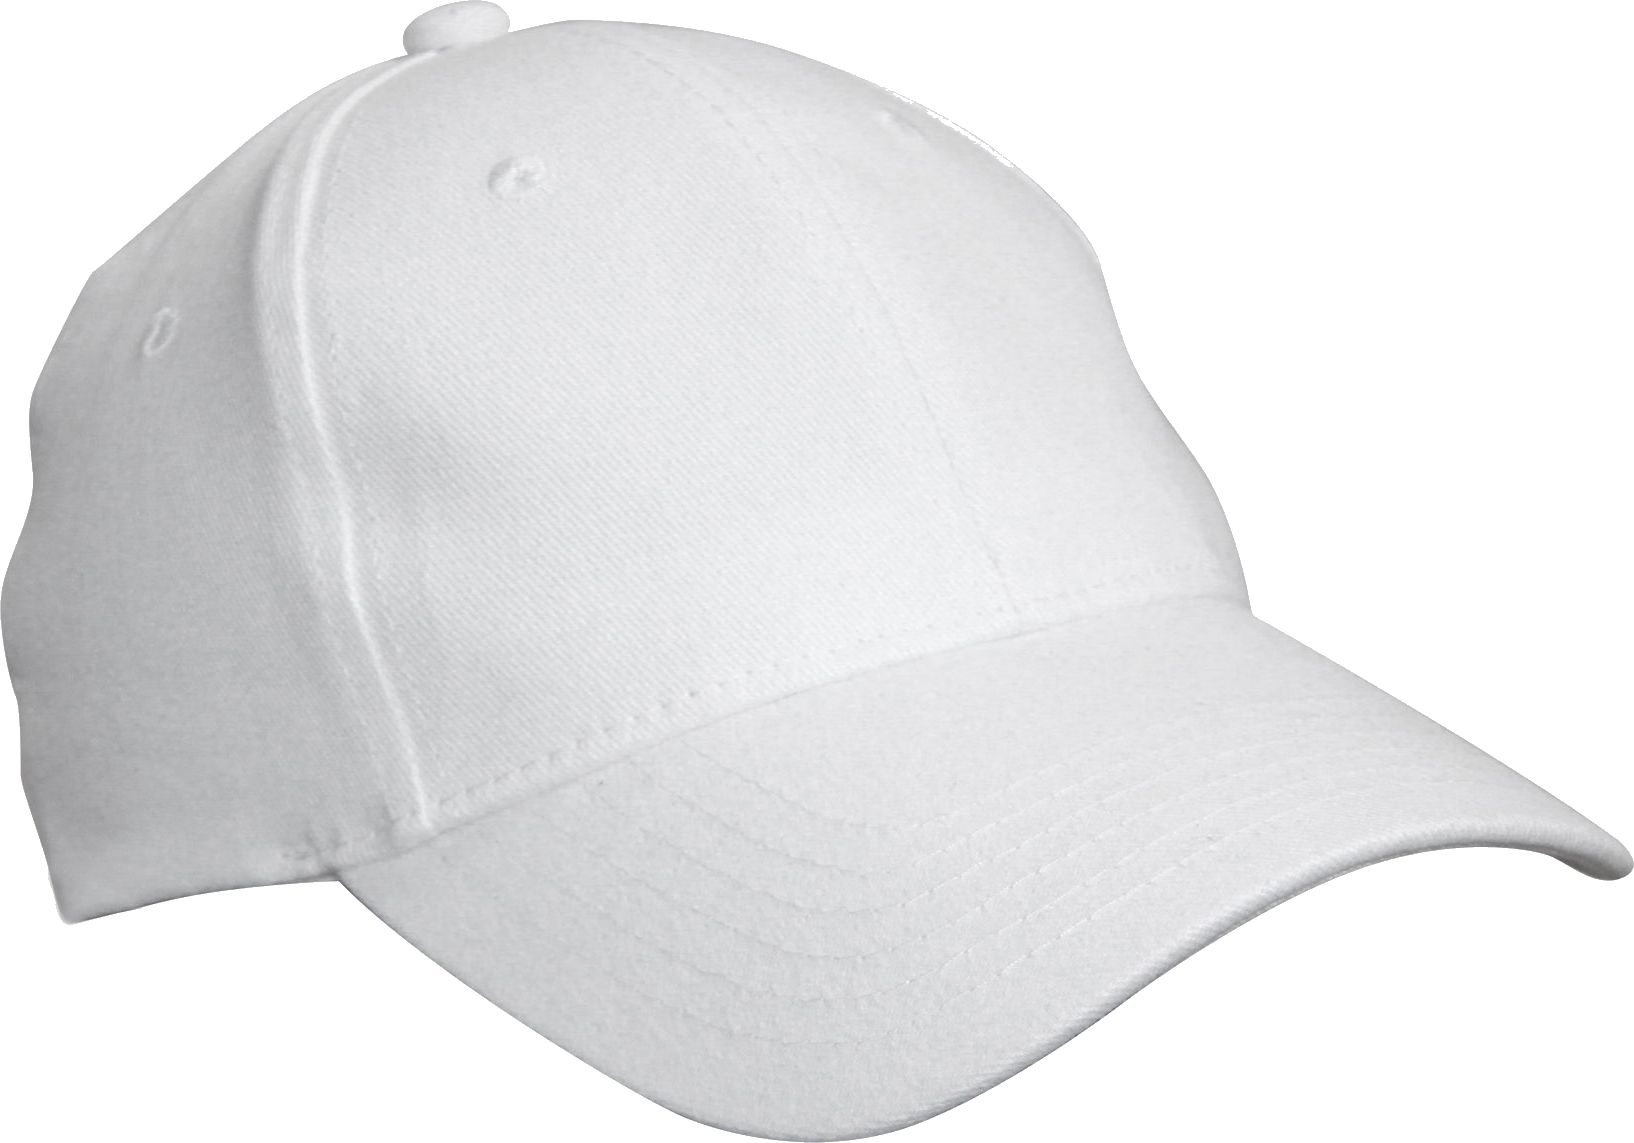 Baseball White Hat Transparent Background